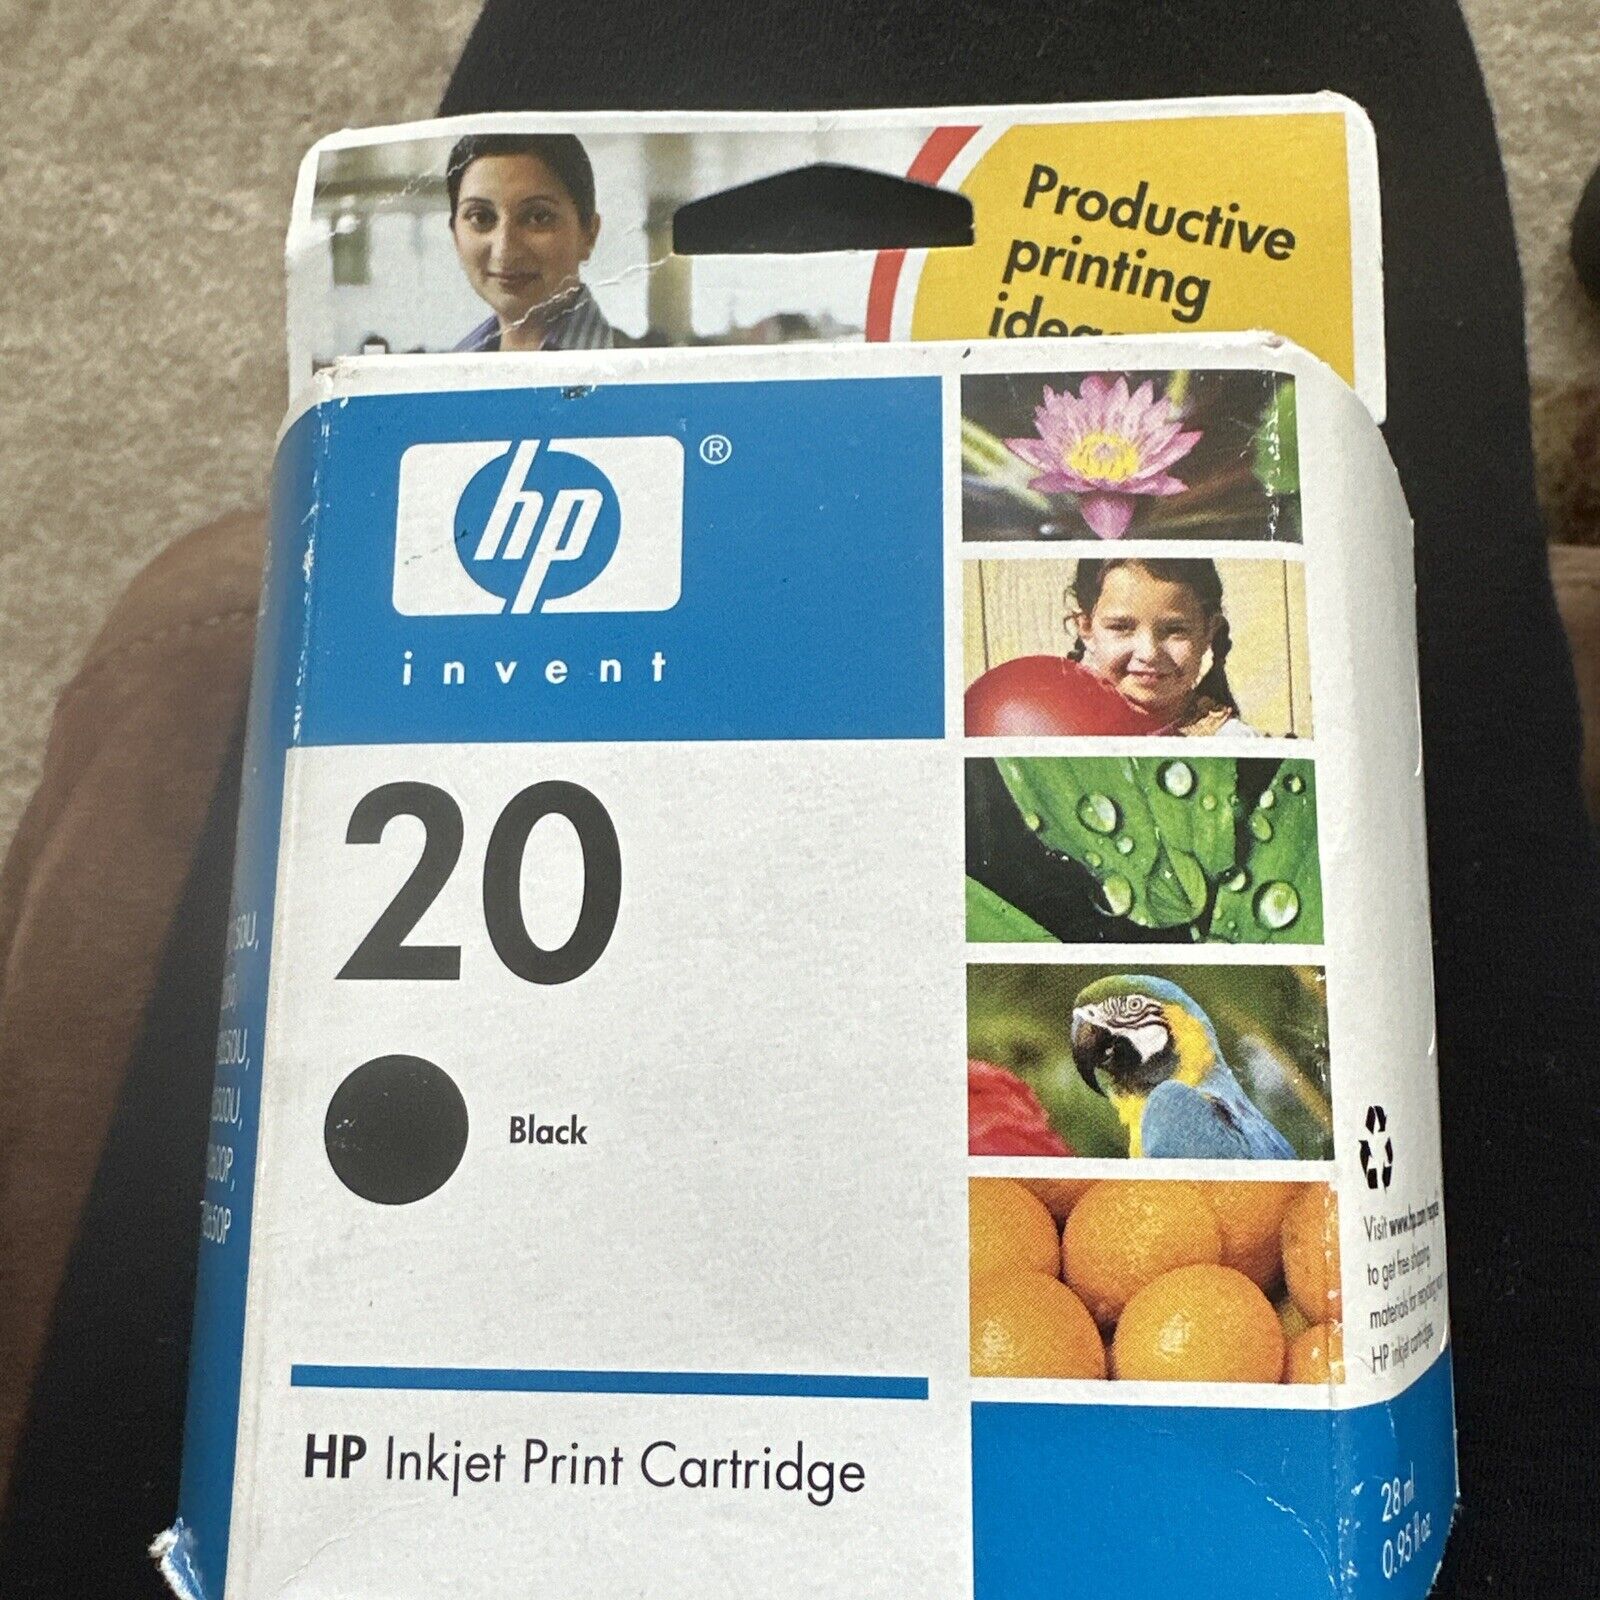 Hewlett-Packard HP 20 Inkjet Black Ink Print Cartridge EXP 11/2007 Expired